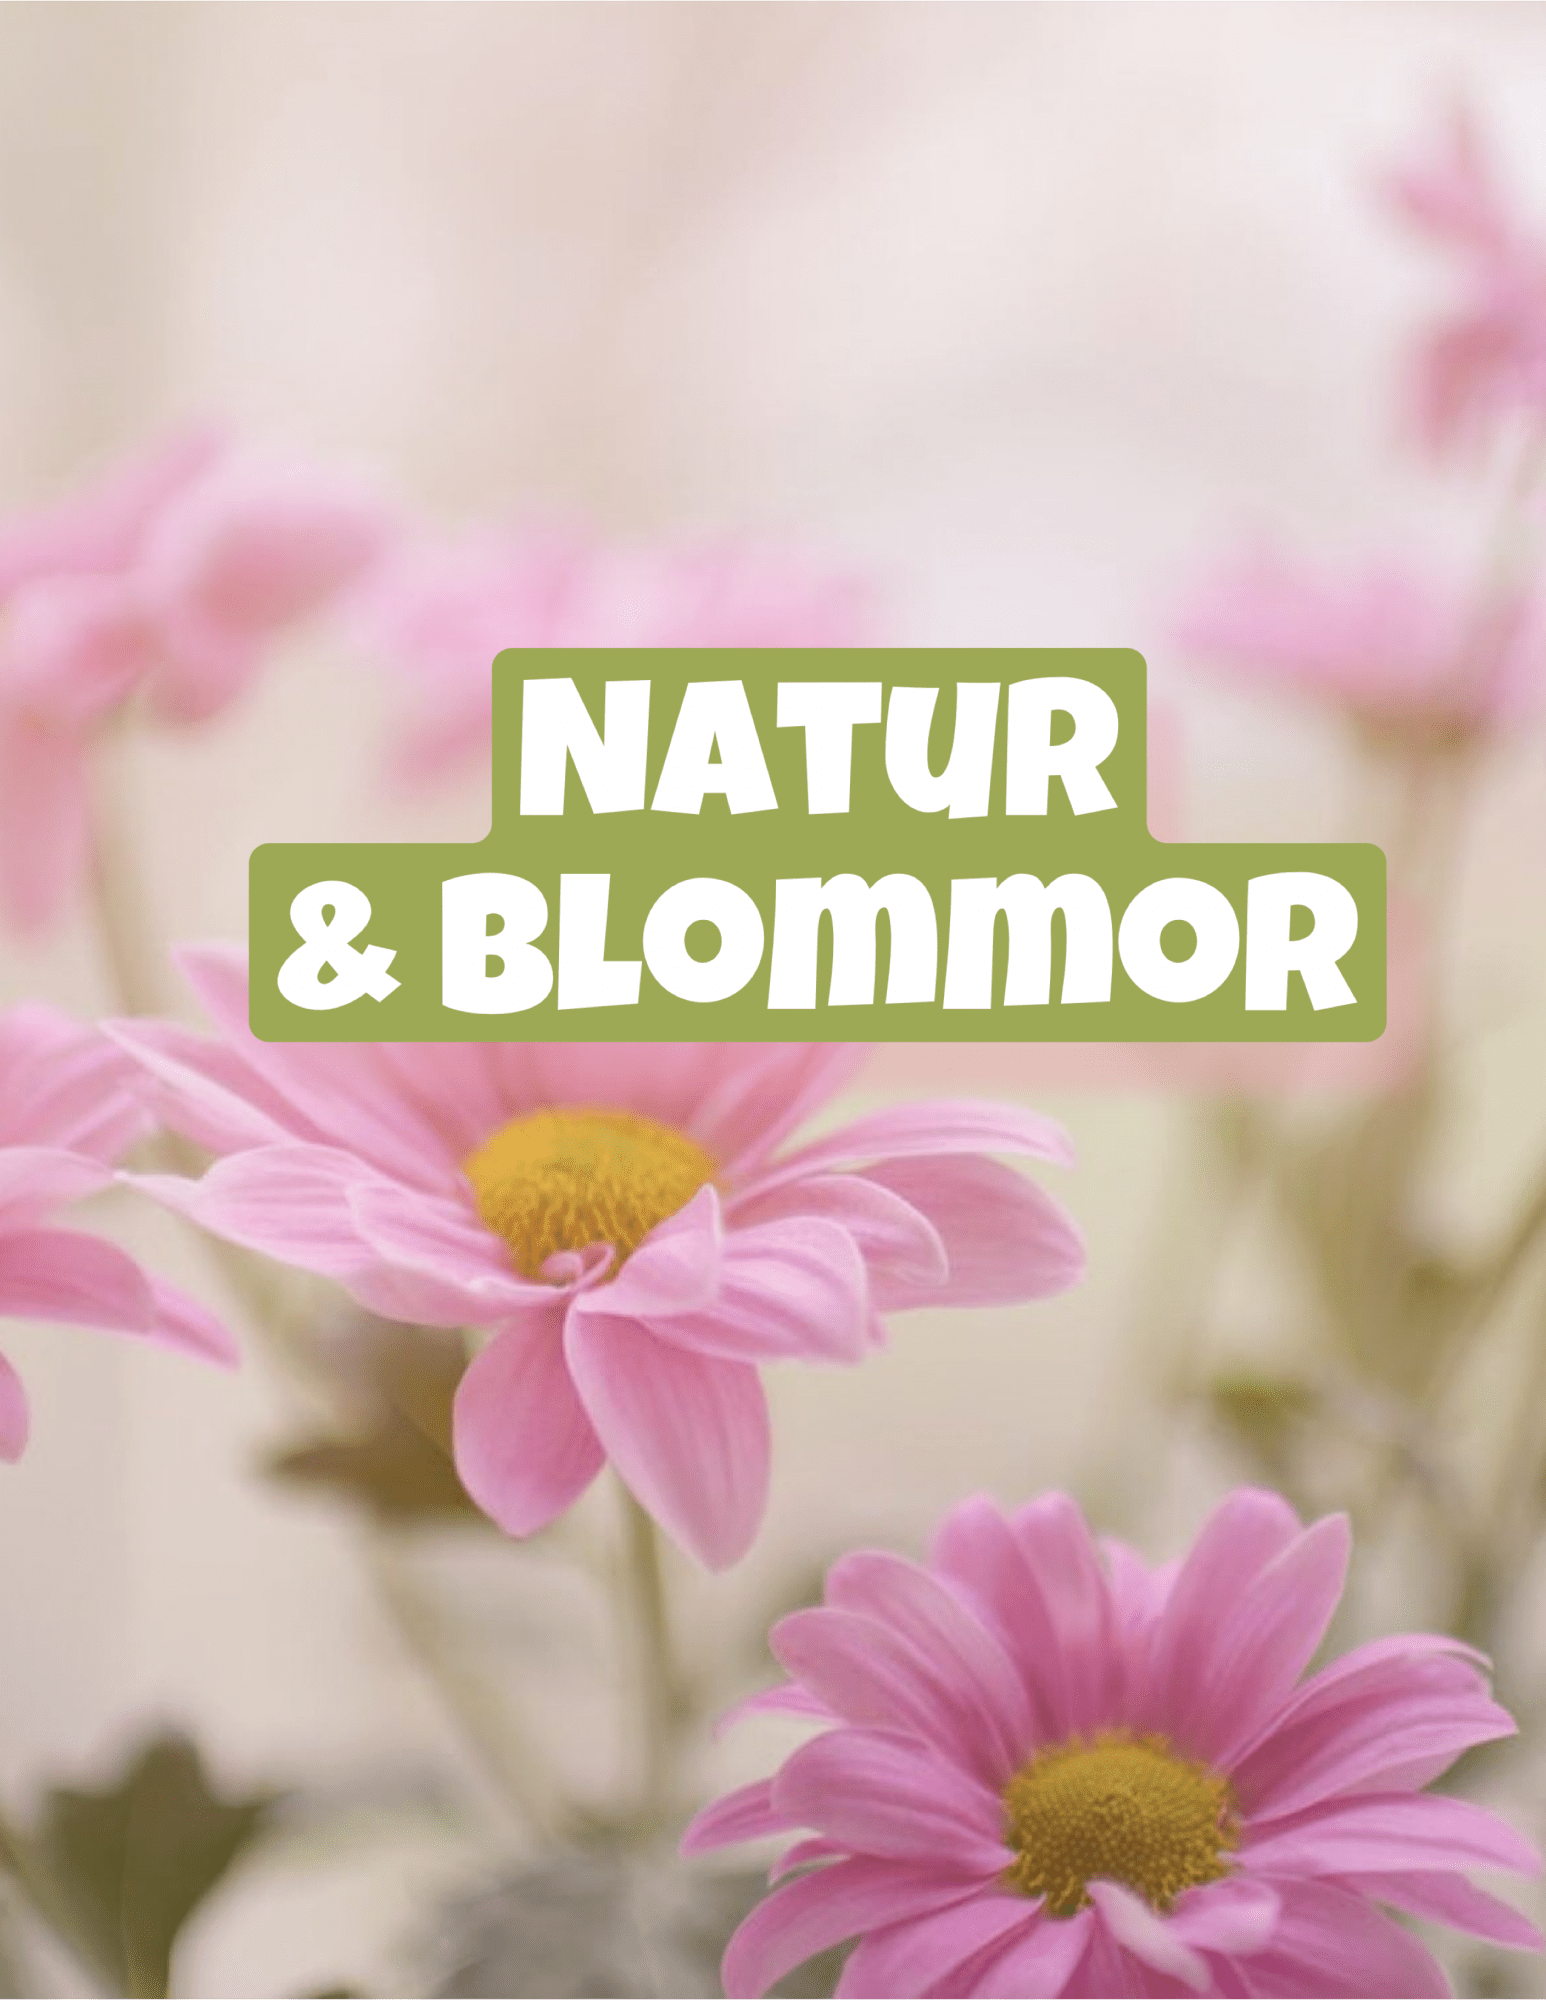 Natur & blommor - NataliasAtelje